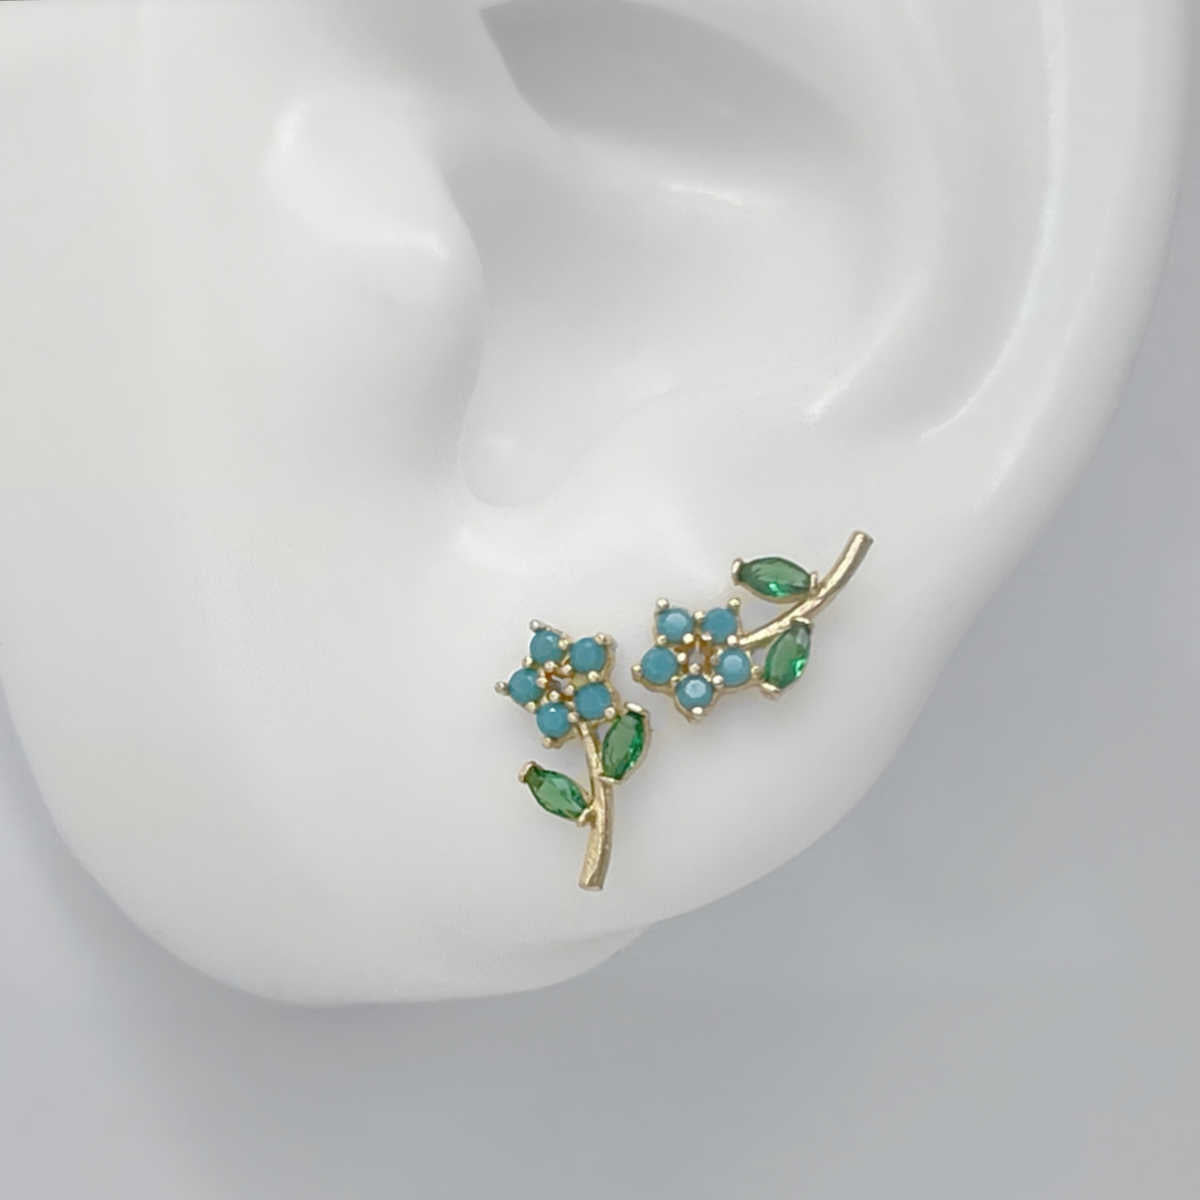 Blue Flower Earrings on Ear, 14K Gold & Turquoise Studs, Two of Most Fine Jewelry